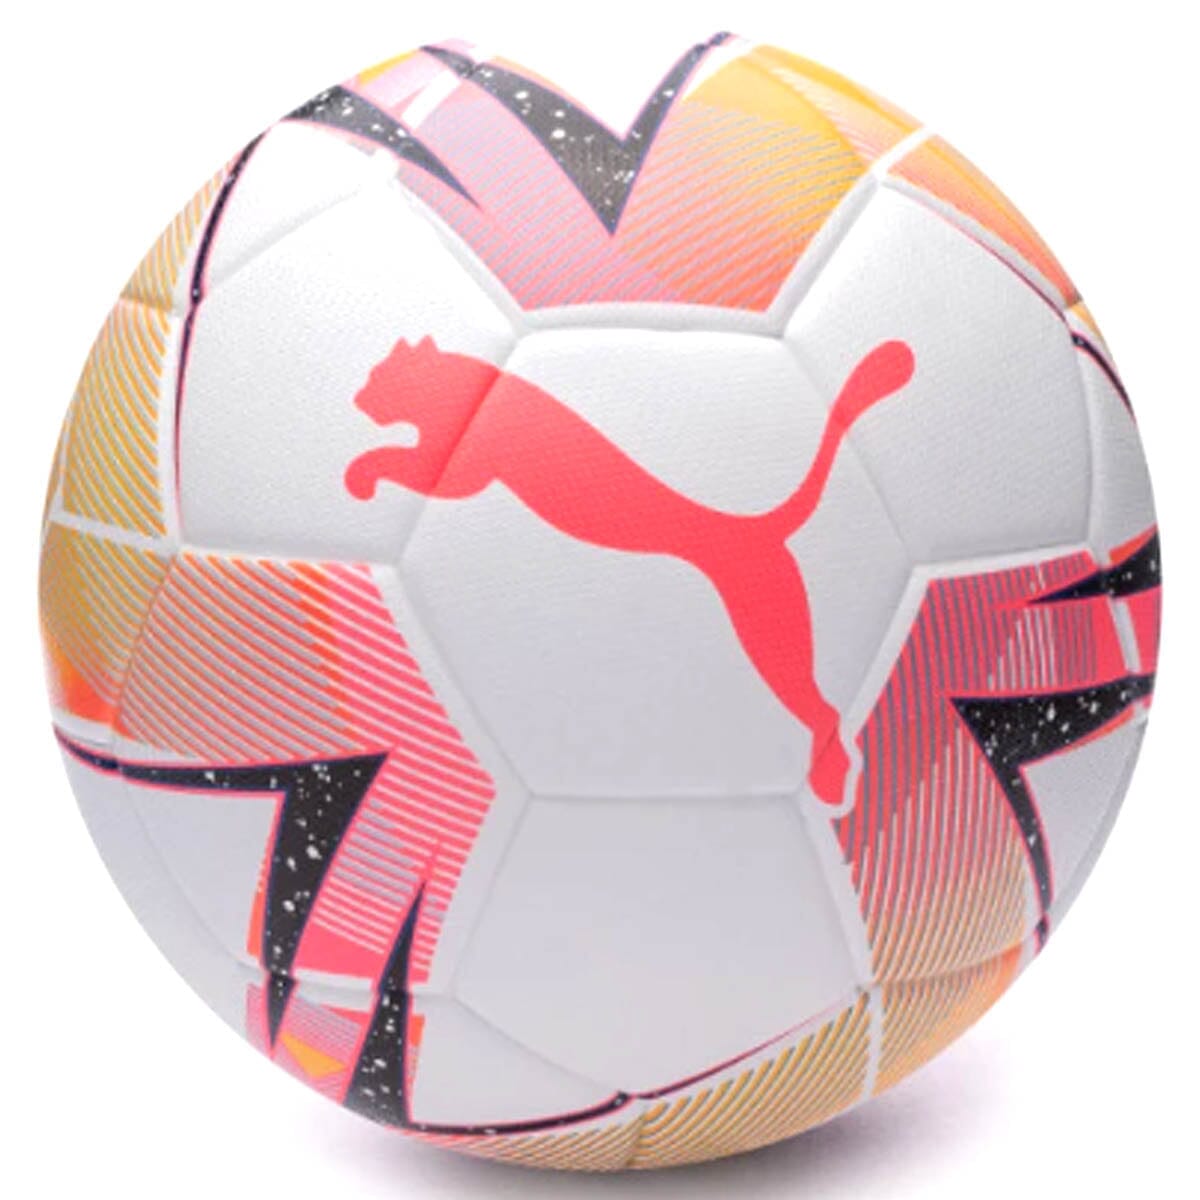 Puma Futsal 1 TB FIFA Quality Pro Ball | 08376301 Soccer Ball Puma 